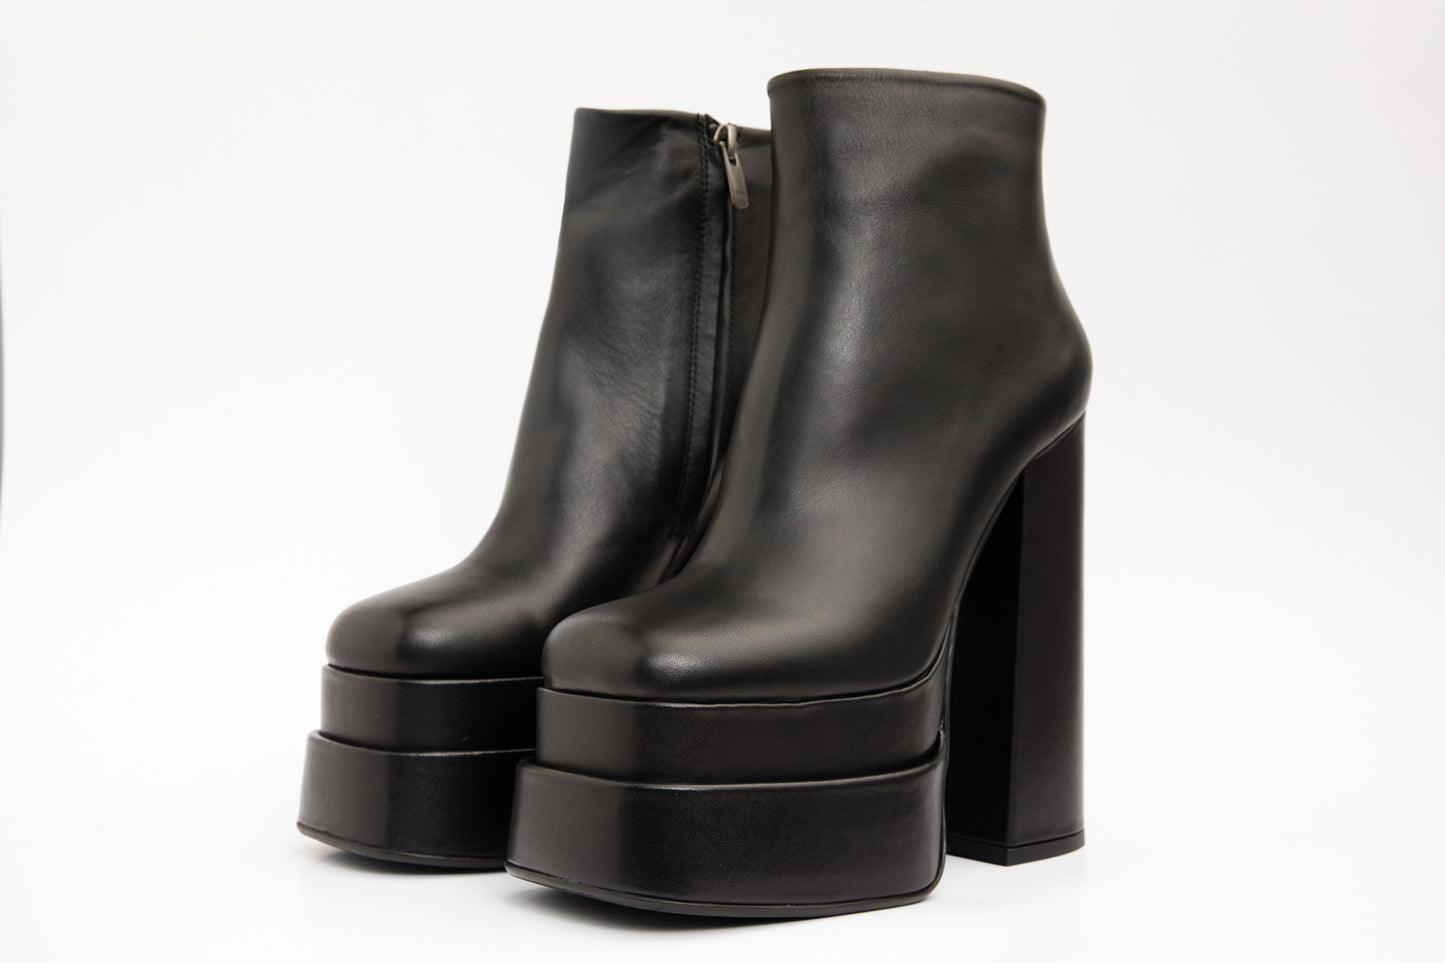 The Latino Black Leather High Heel Women Boot